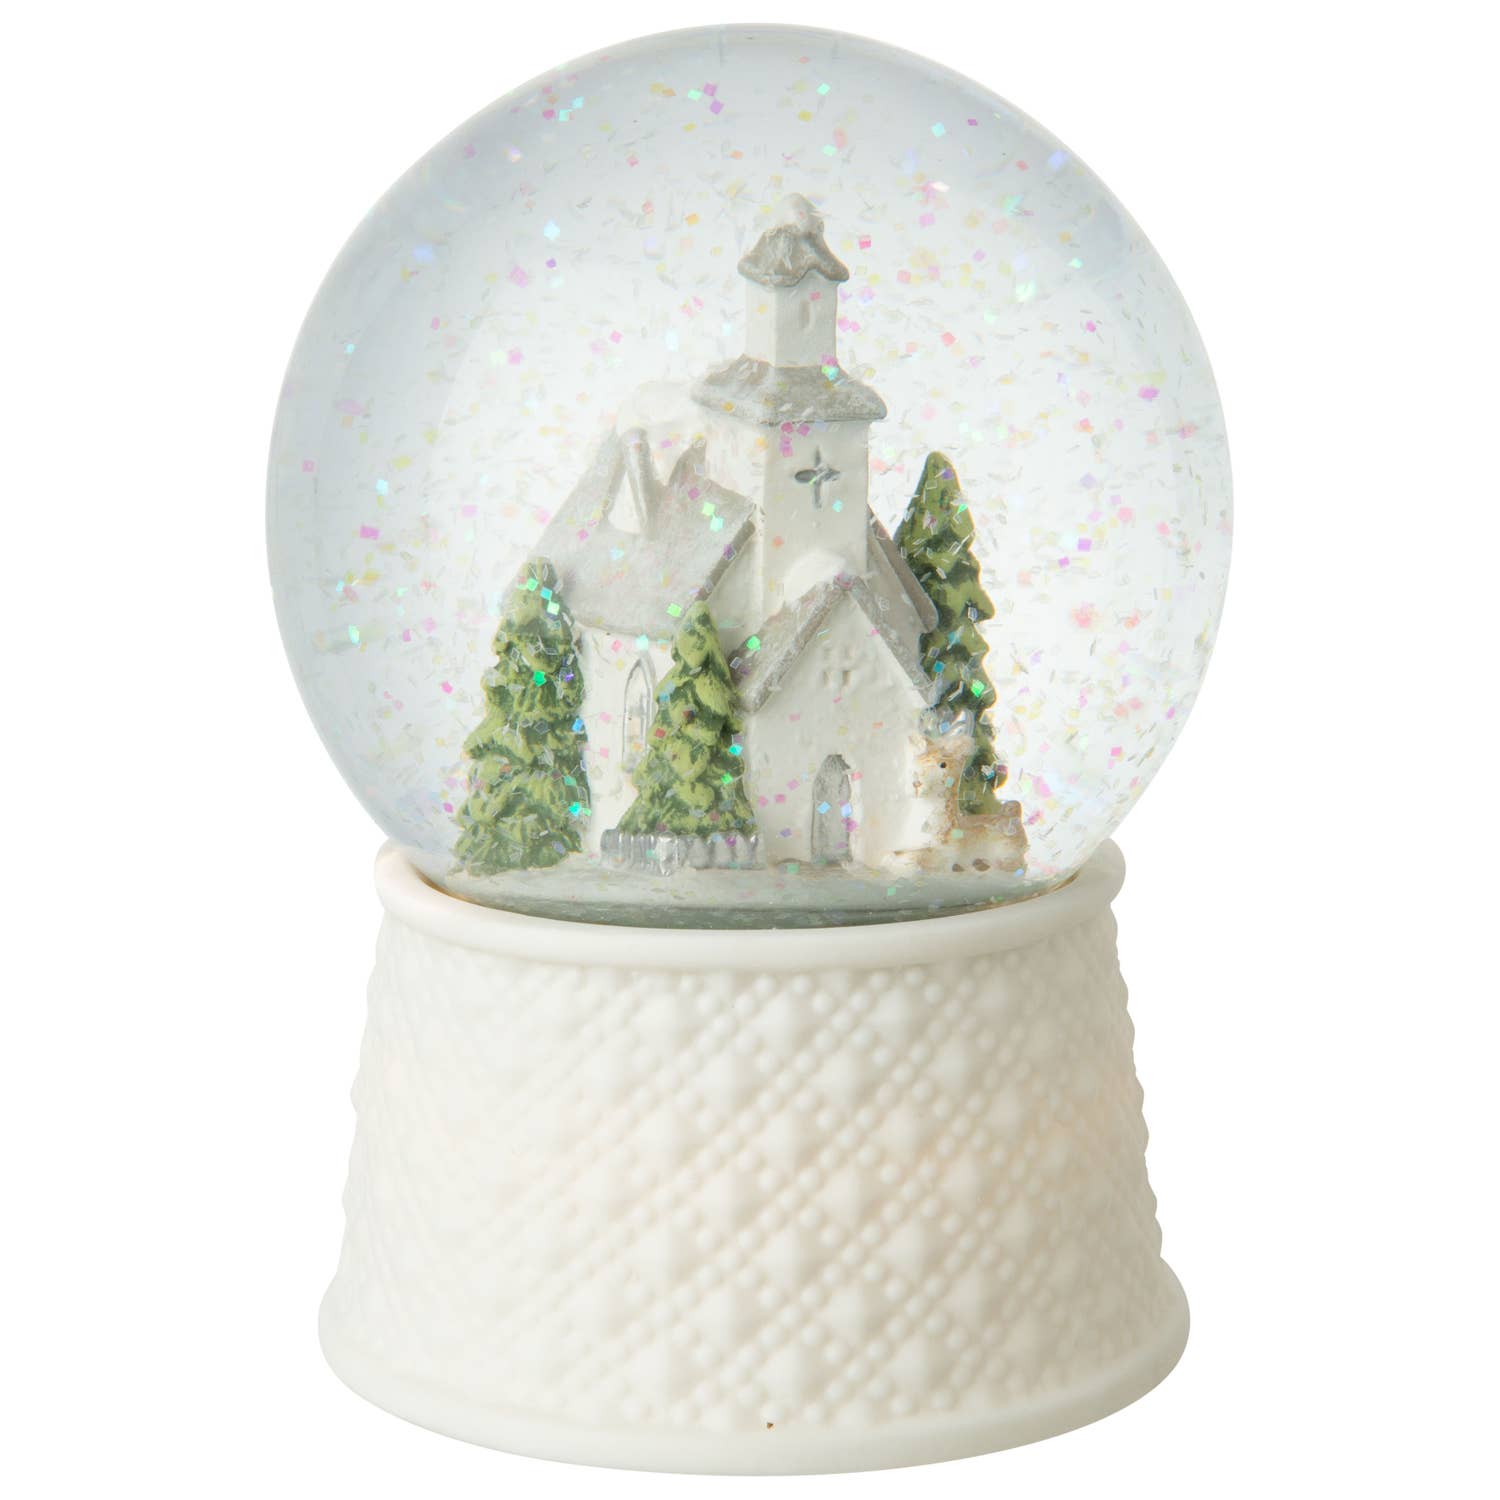 Beautiful Ideas for Christmas Home Decor. Winter church Snow Globe